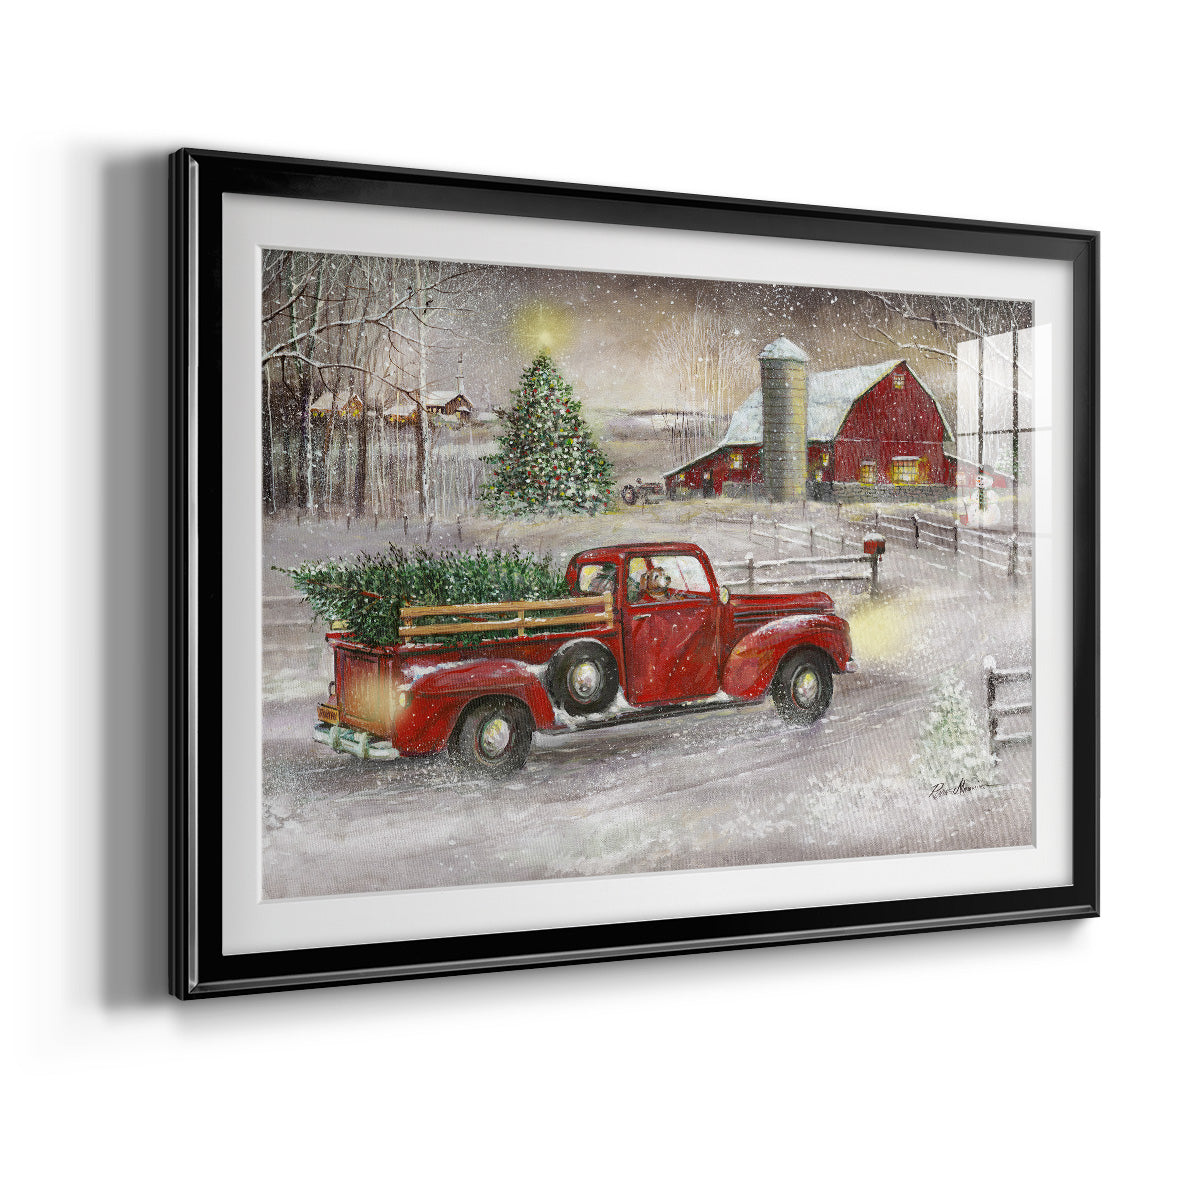 Making Christmas Memories Premium Framed Print - Ready to Hang